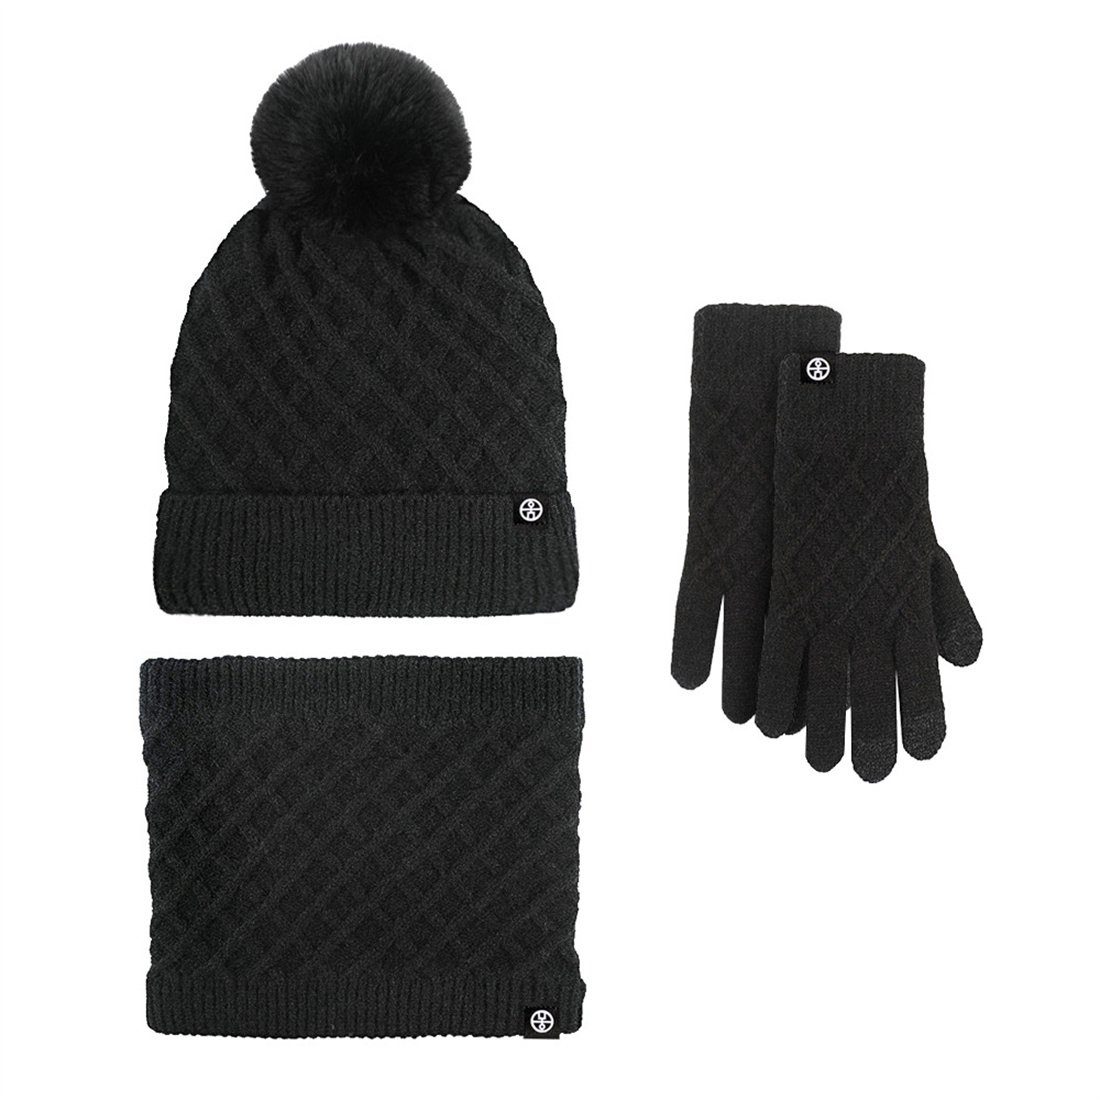 DÖRÖY Strickmütze Winter gepolstert Warm Mütze Schal Handschuhe 3 Stück, Warm Set Schwarz